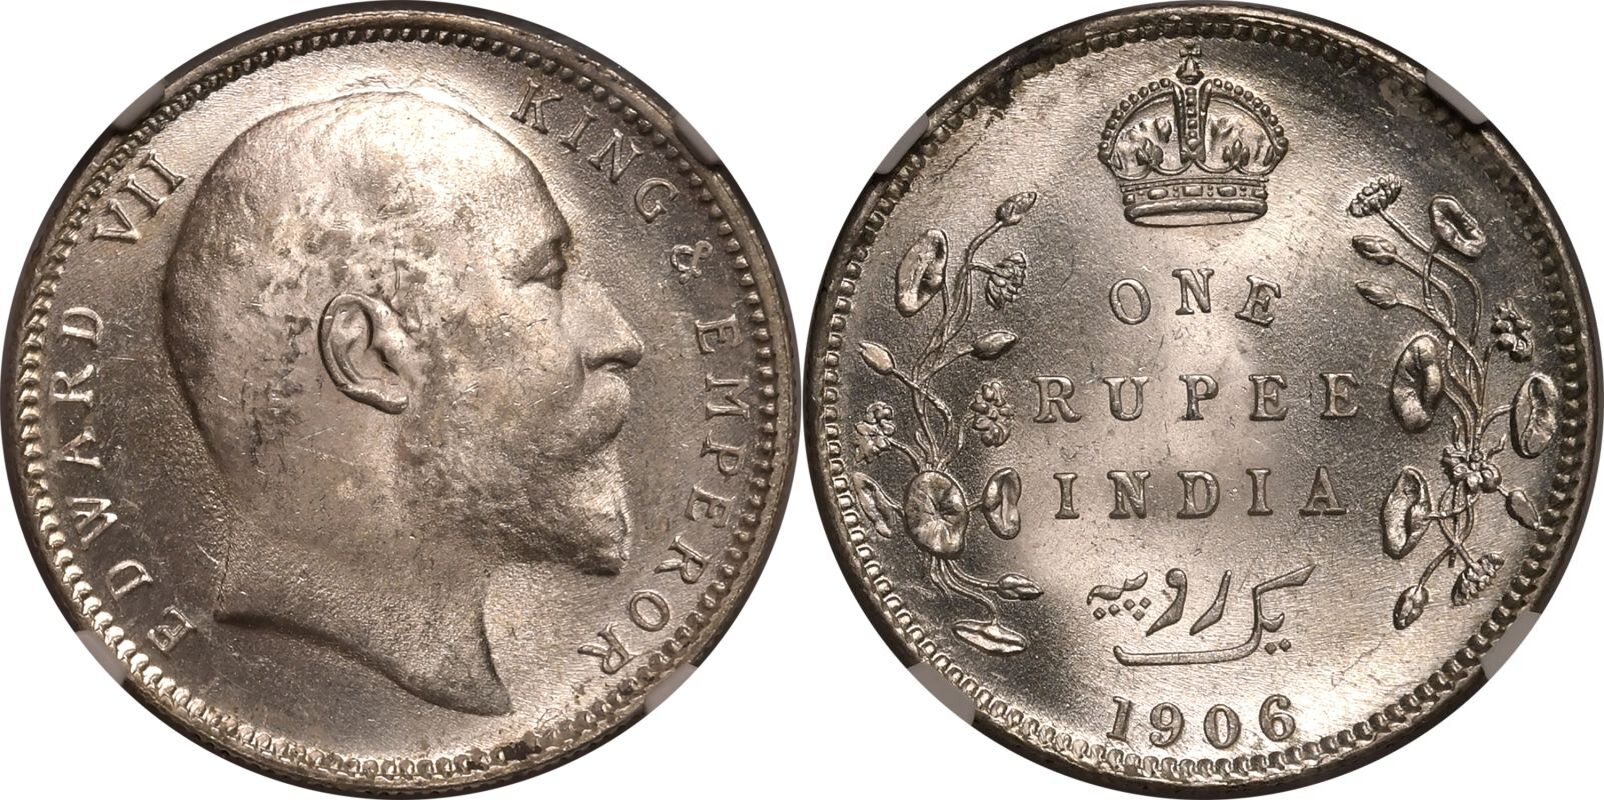 India: British Edward VII 1906 Silver 1 Rupee NGC MS 64